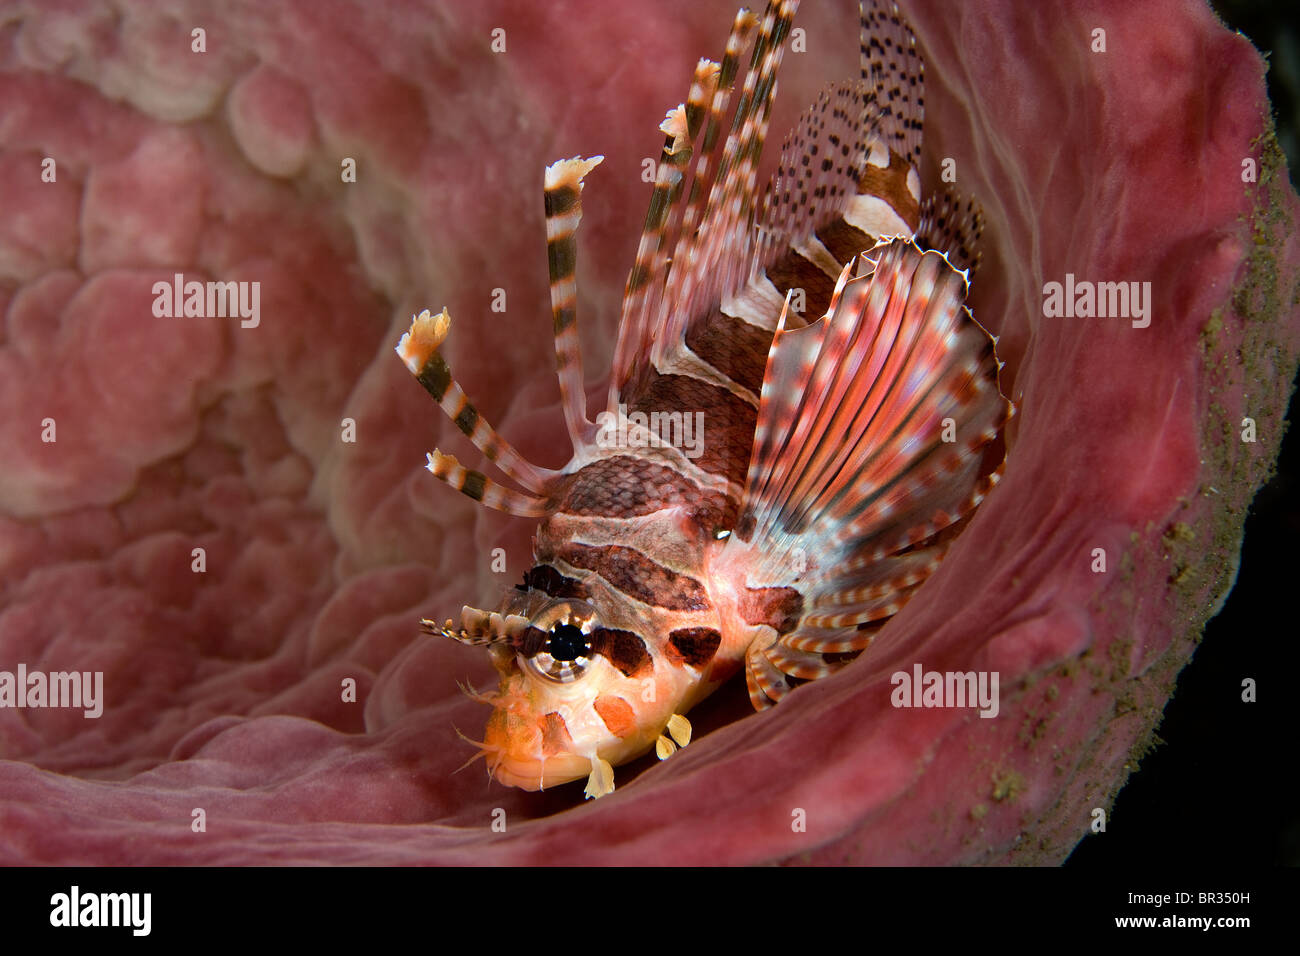 Spotfin lionfish (Pterois antennata) resting inside sponge, Indonesia Stock Photo